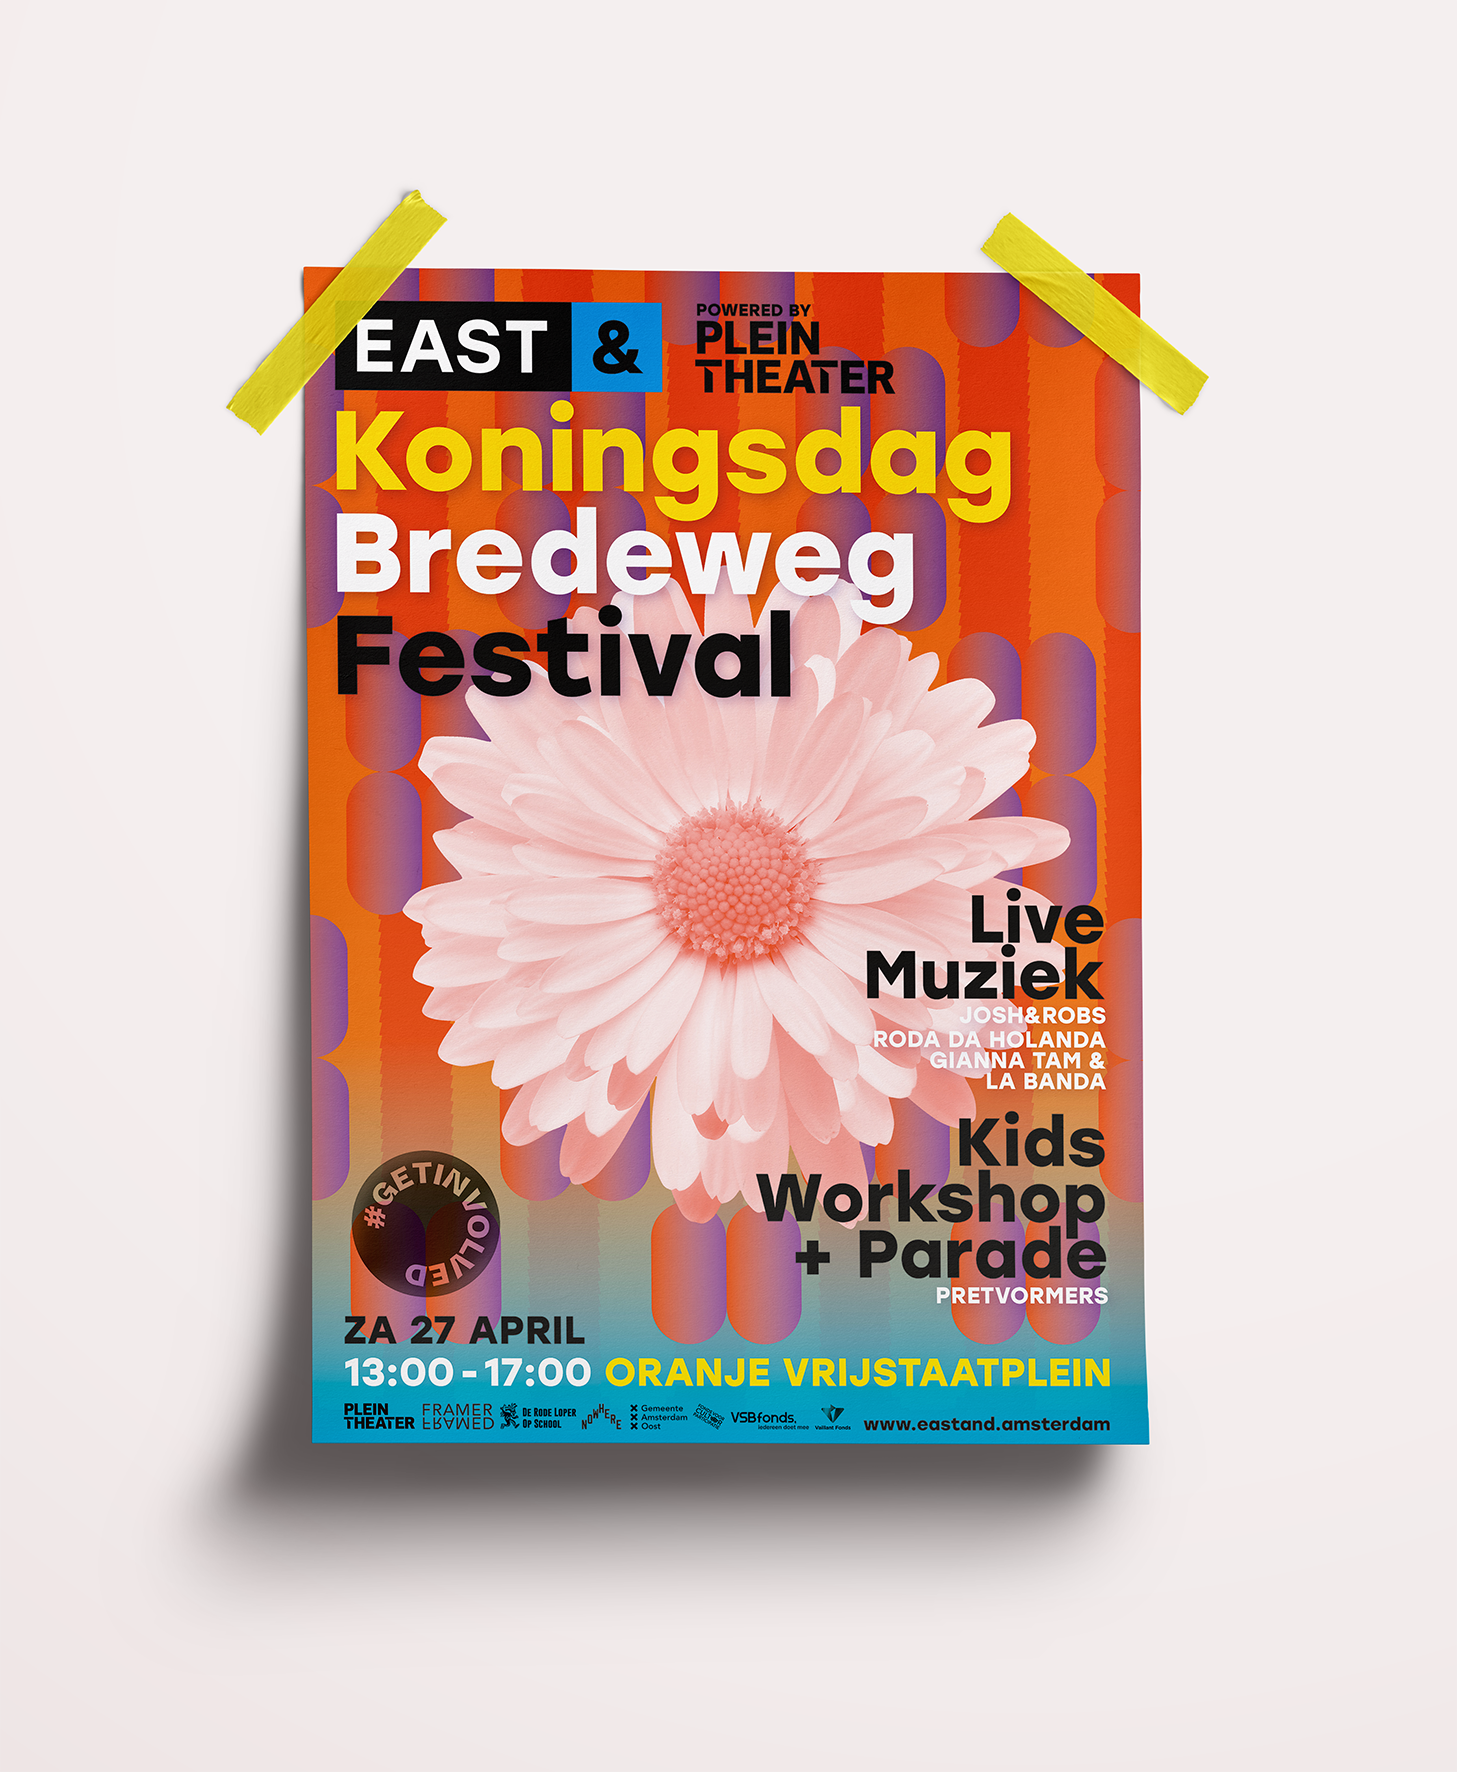 EAST&_KONINGSDAG_Poster_2.png